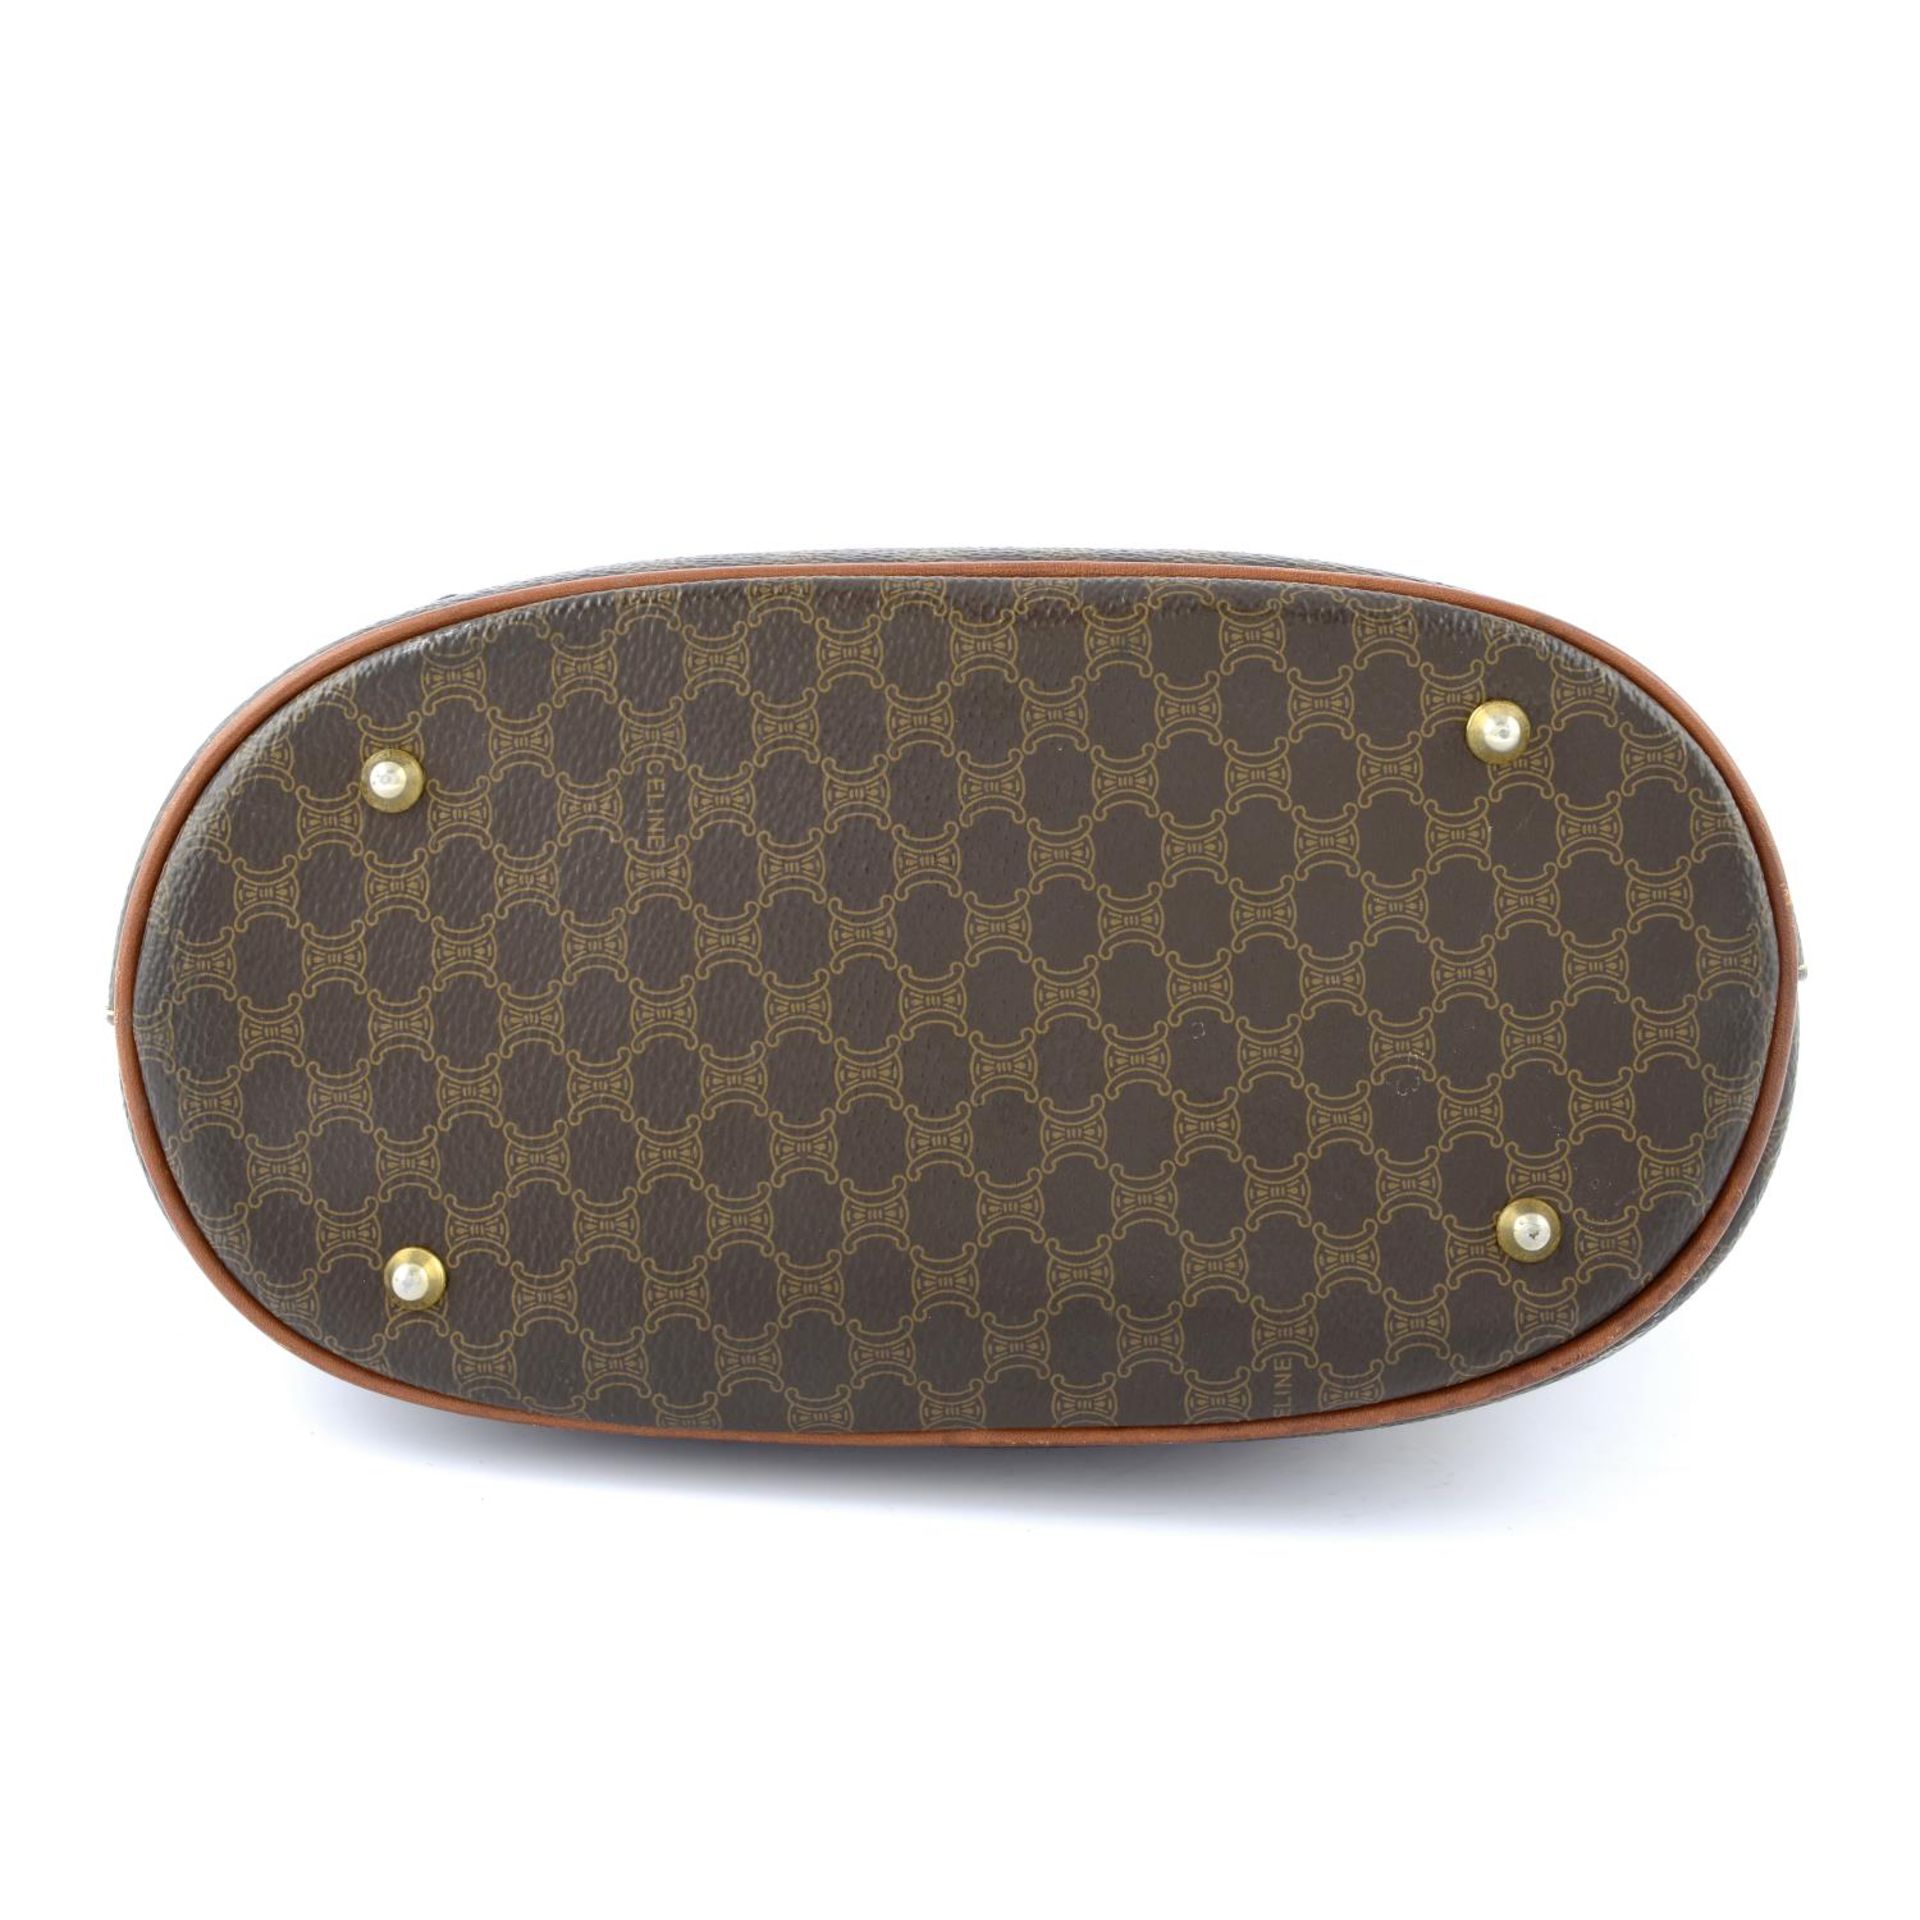 CÉLINE - a Macadam coated canvas handbag. - Image 5 of 5